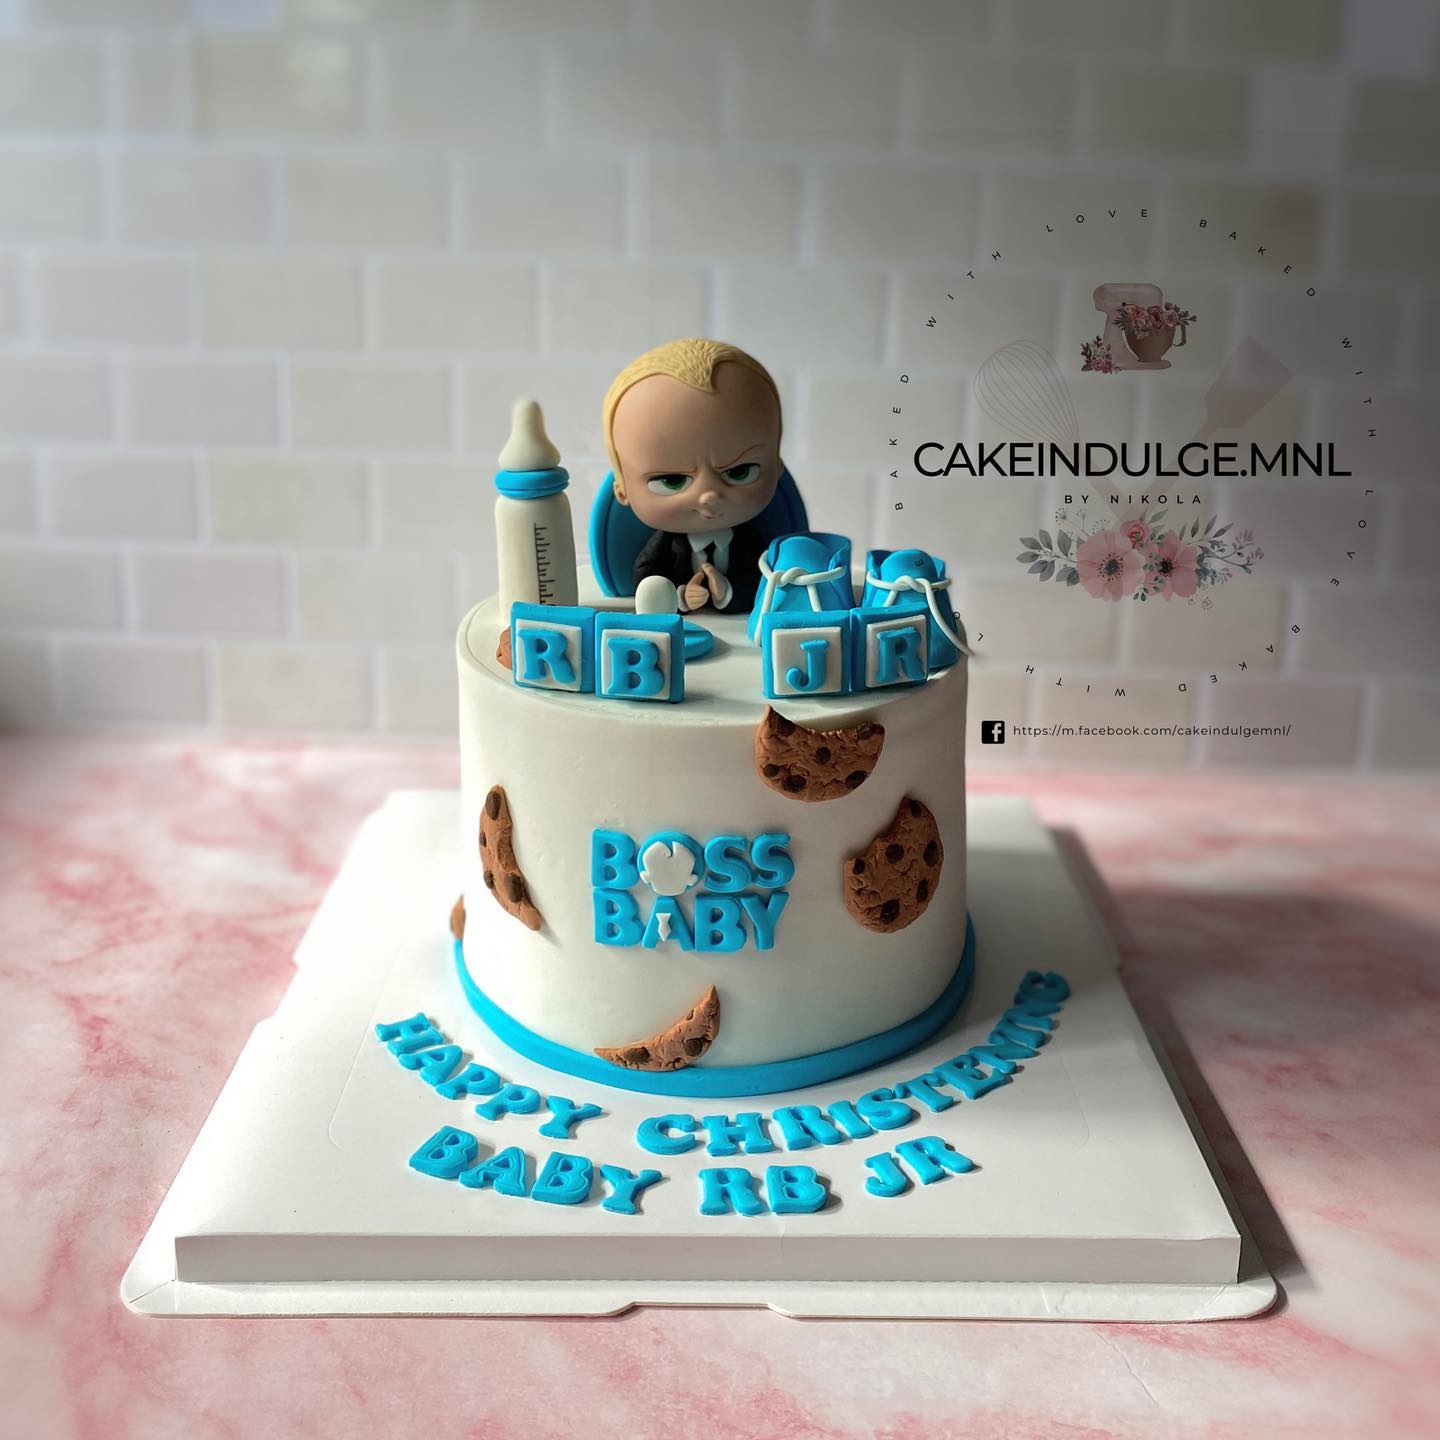 Rich Boss Cake – Creme Castle